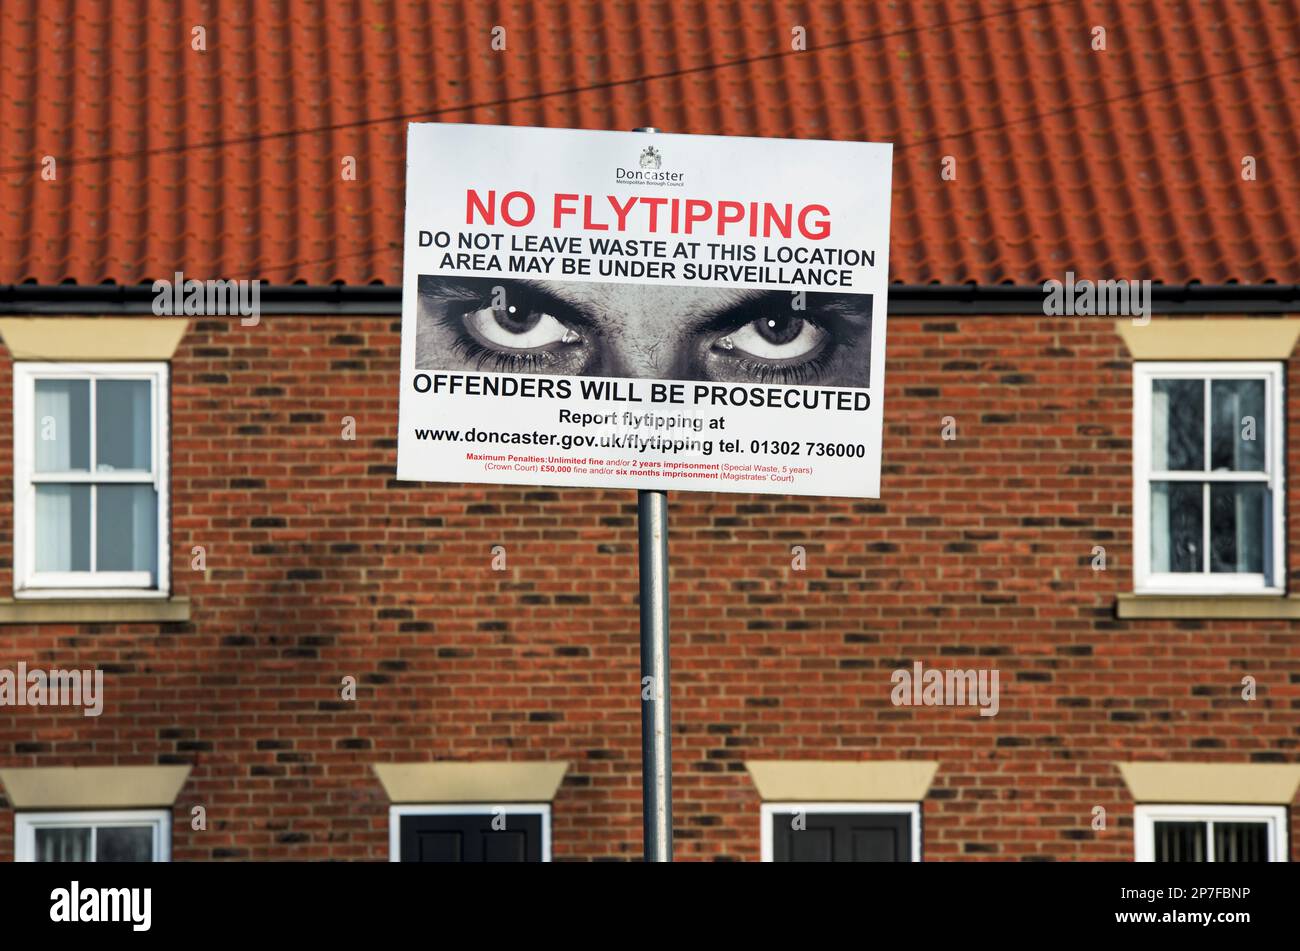 Warning sign – NO FLYTIPPING - in rural setting, England, UK Stock Photo